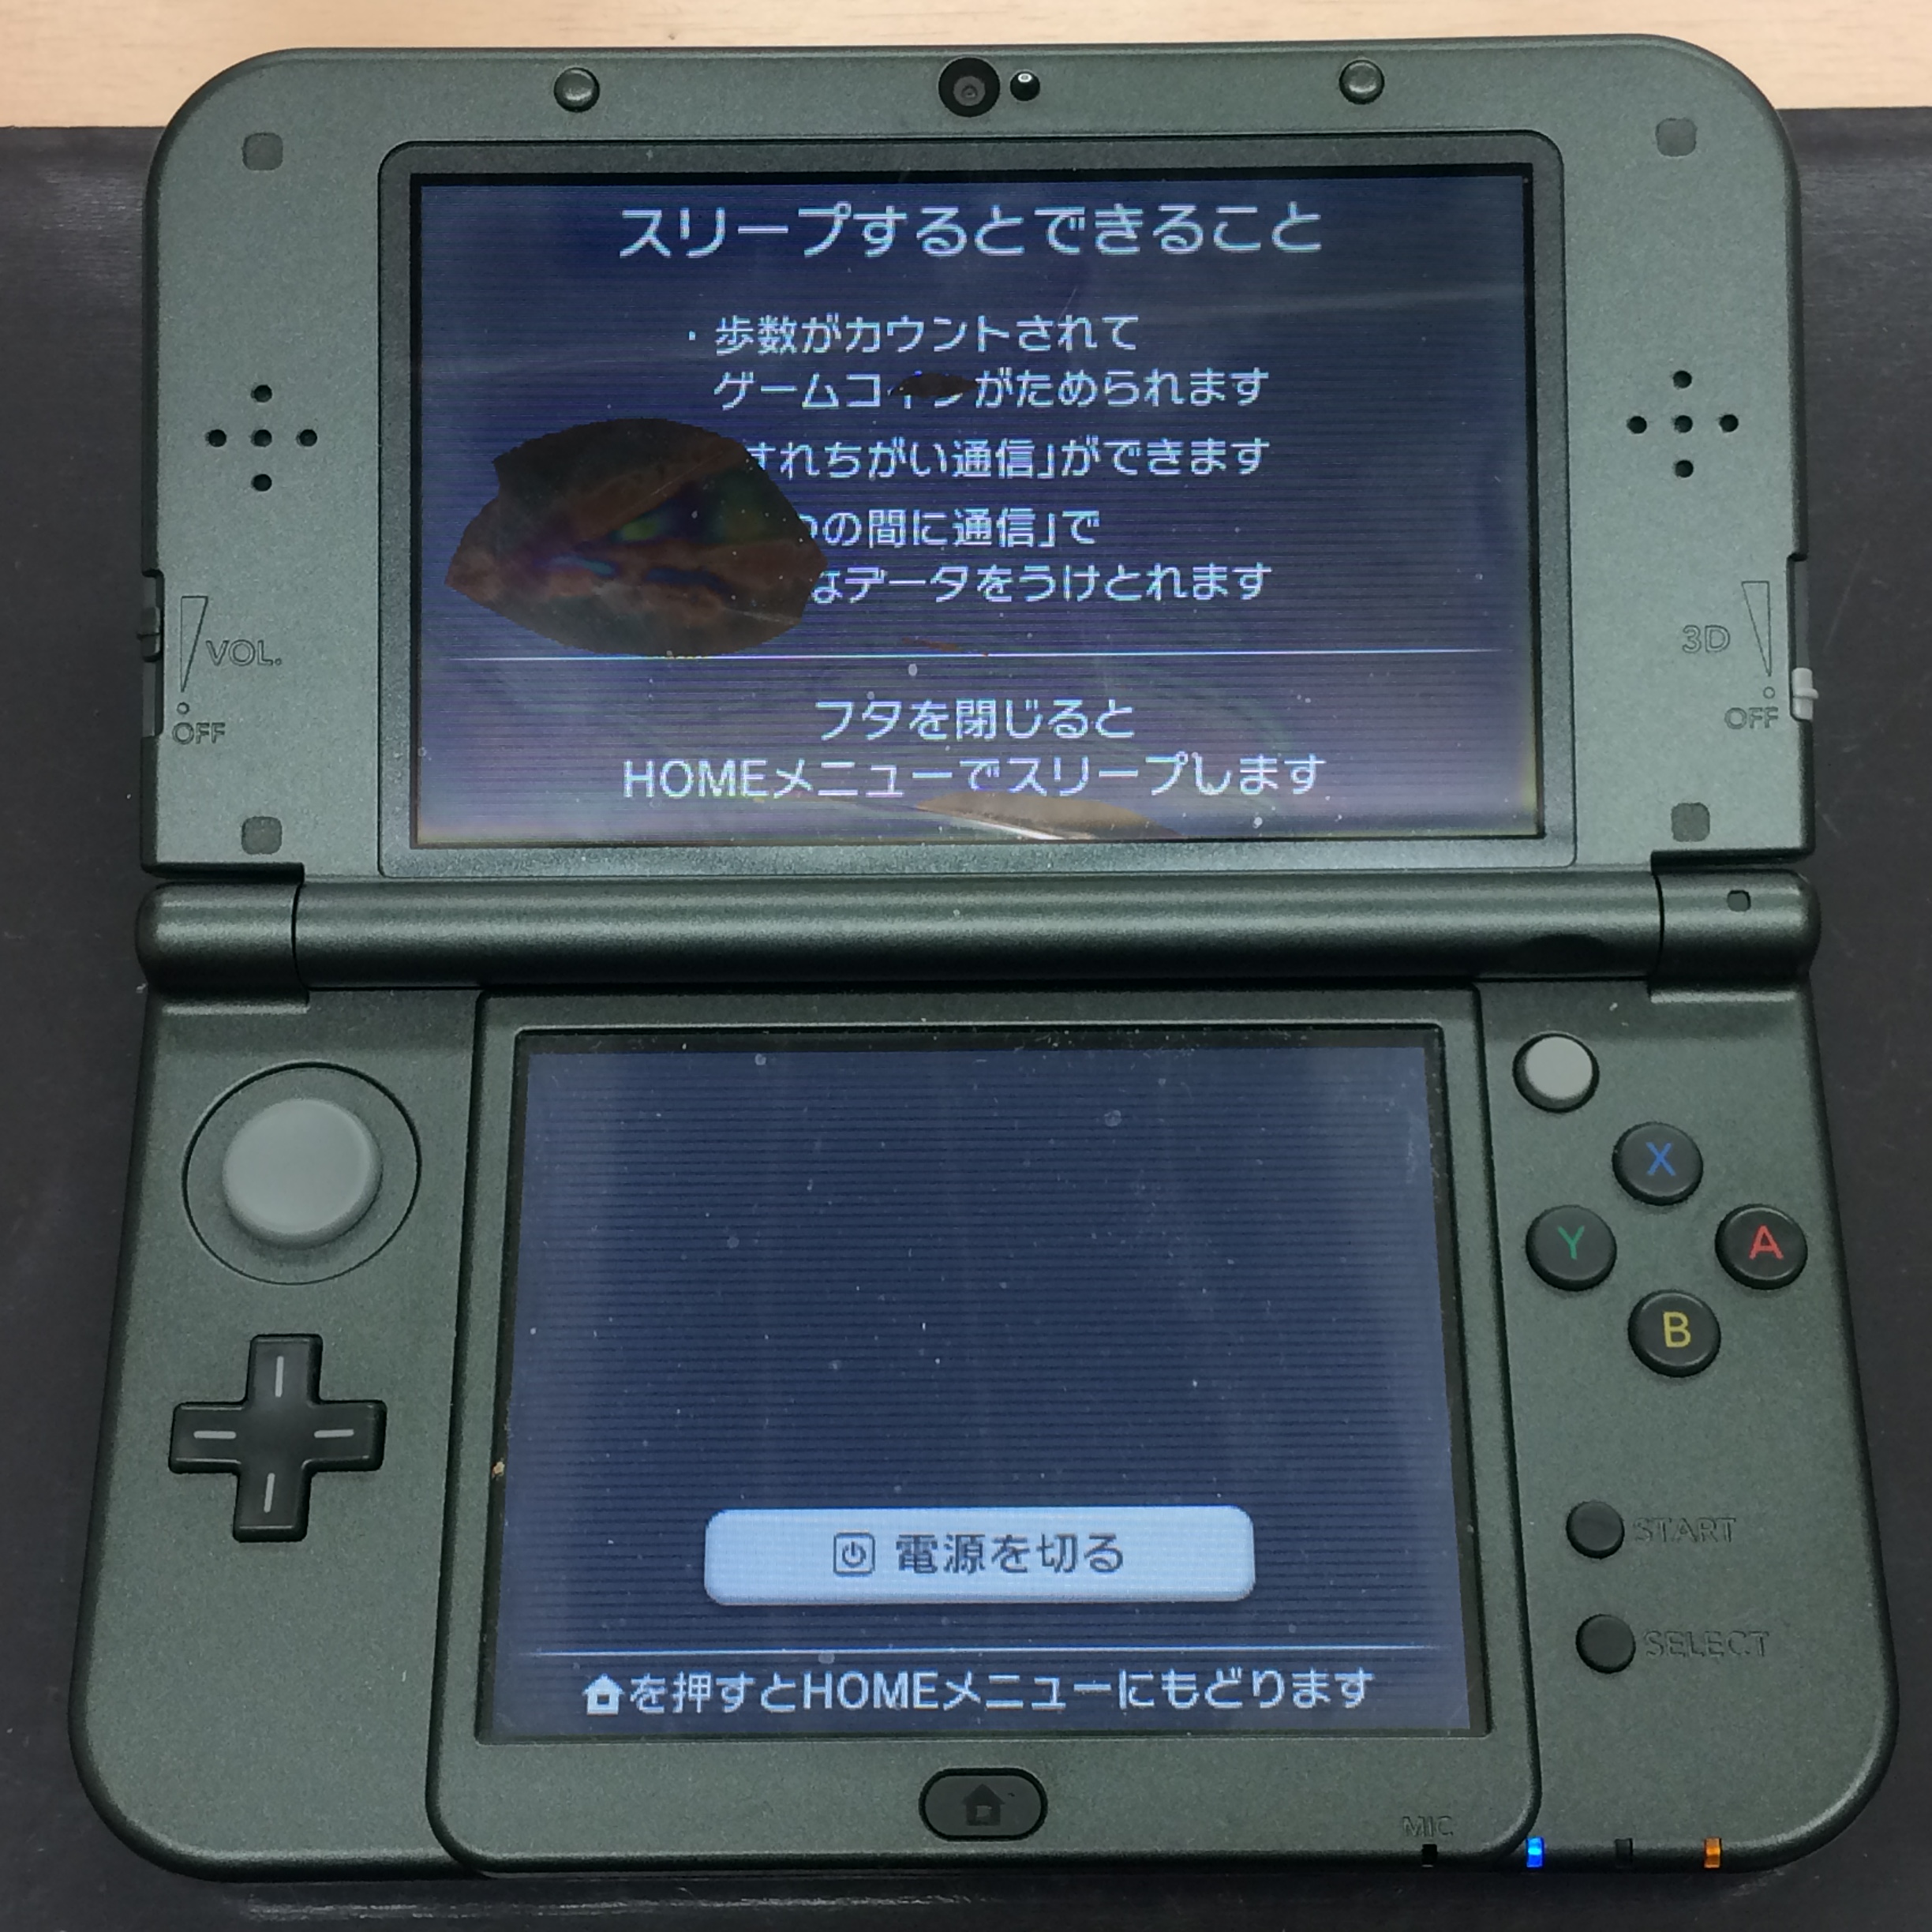 New3ds Llで上画面の黒いシミで修理です Nintendo3ds Switch Psp 修理のゲームホスピタル Nintendo3ds ニンテンドーds Psp 修理